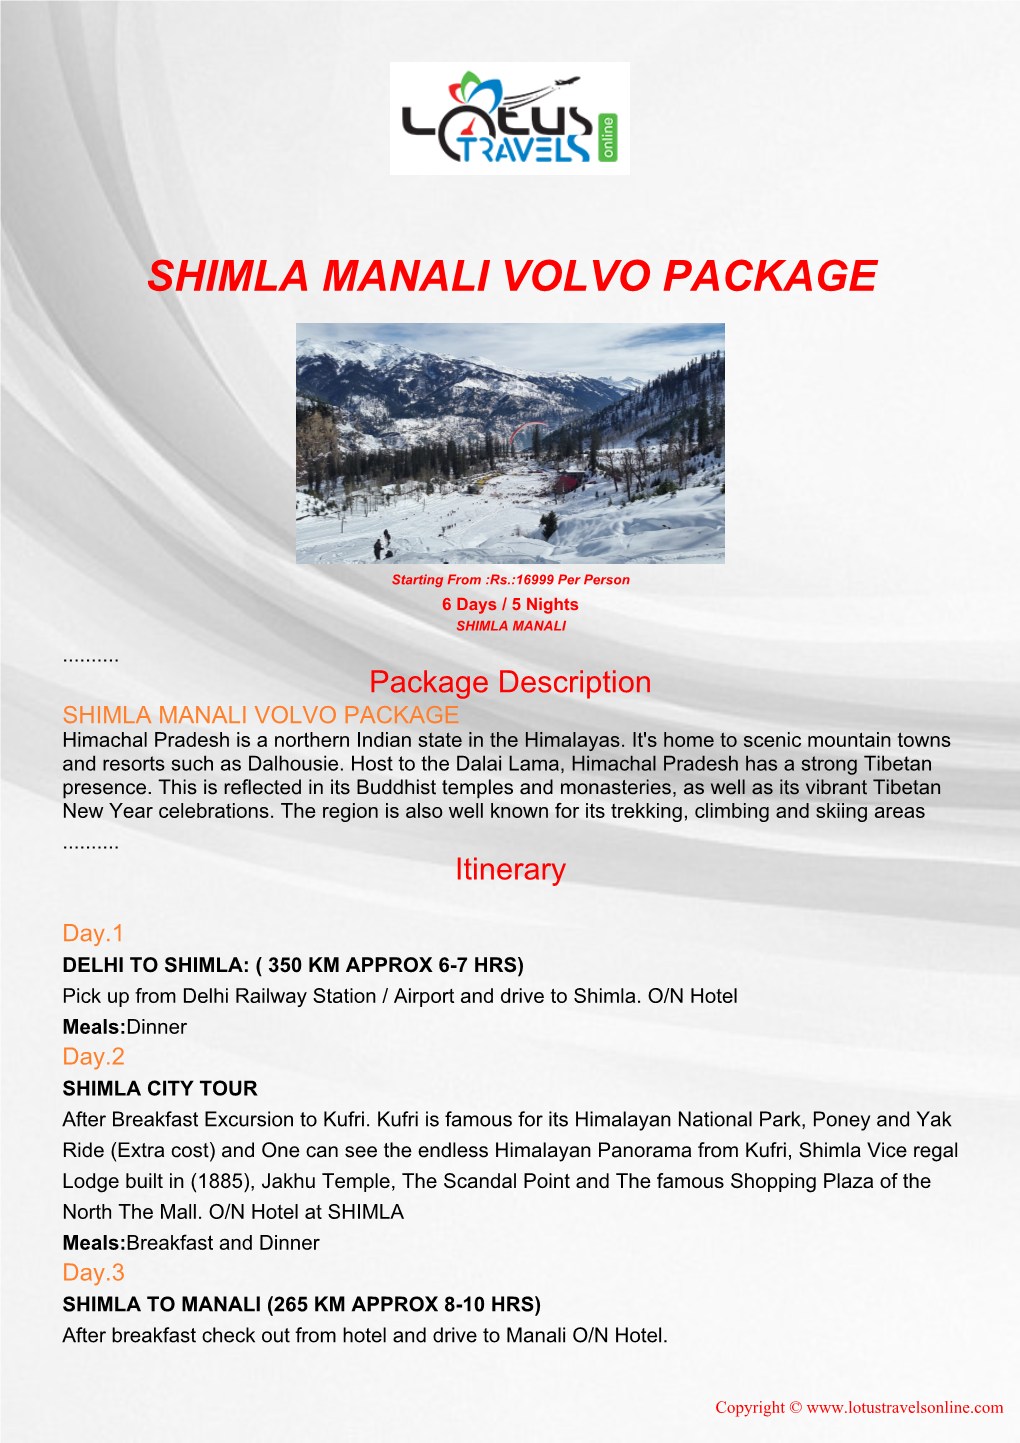 Shimla Manali Volvo Package